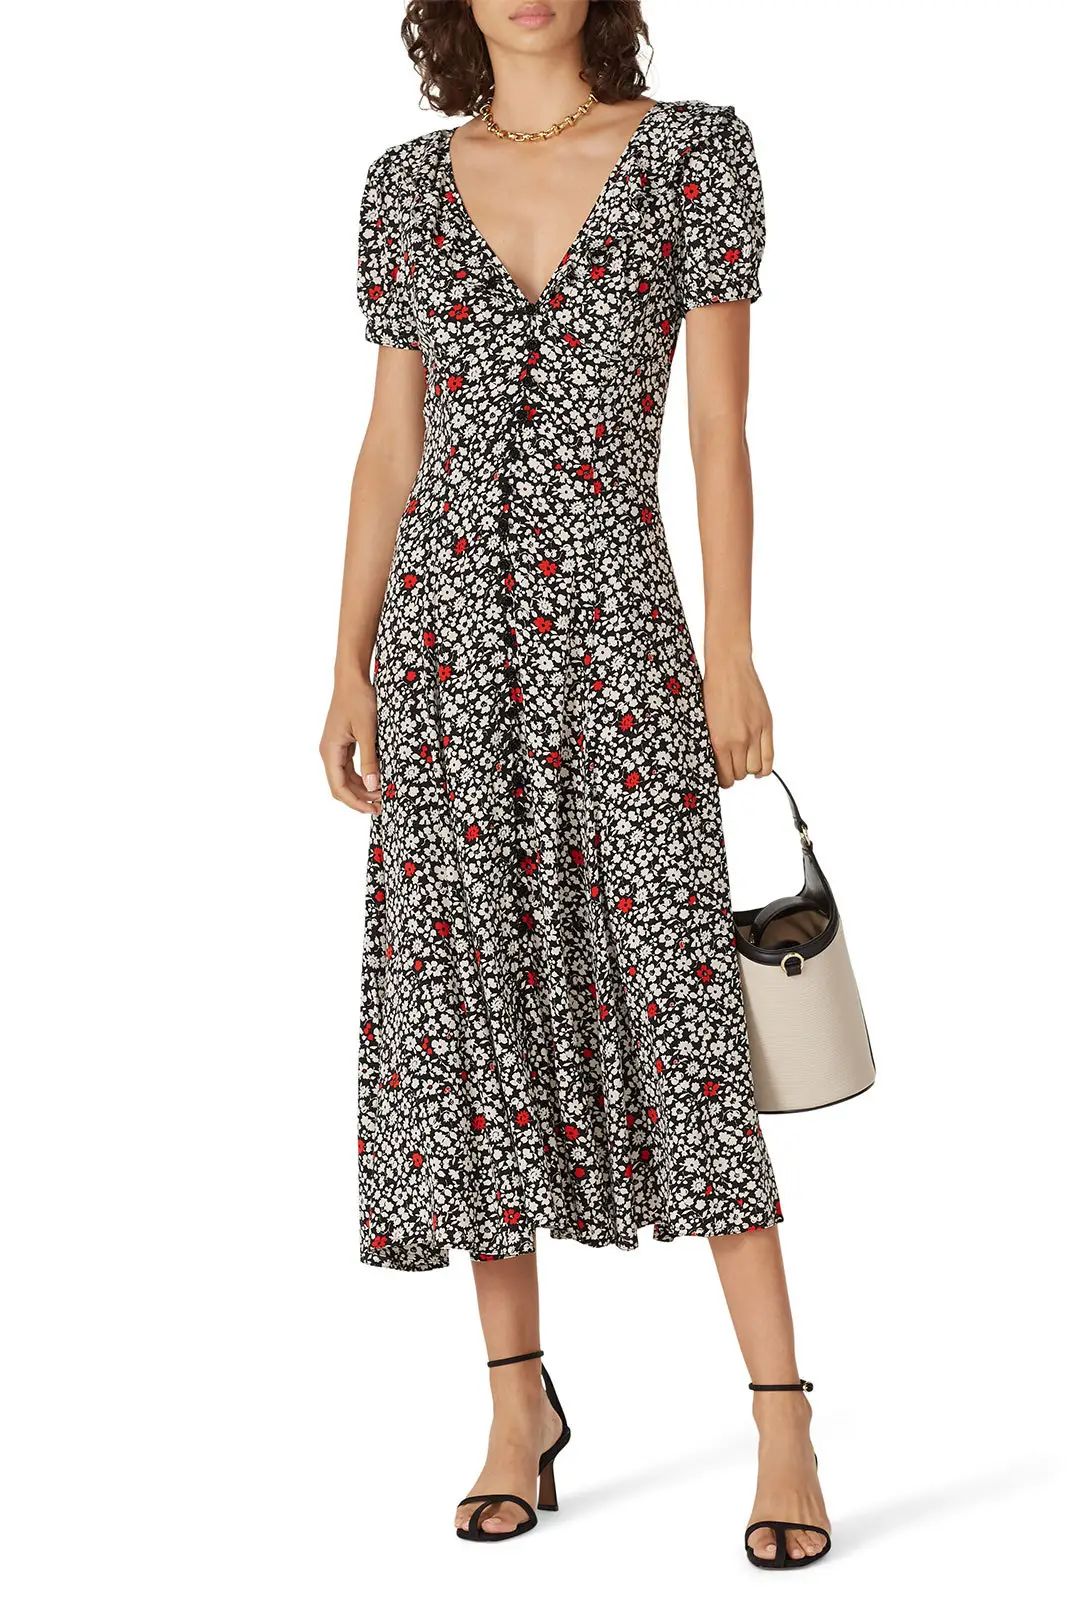 Polo Ralph Lauren Black Floral Short Sleeves Dress | Rent The Runway